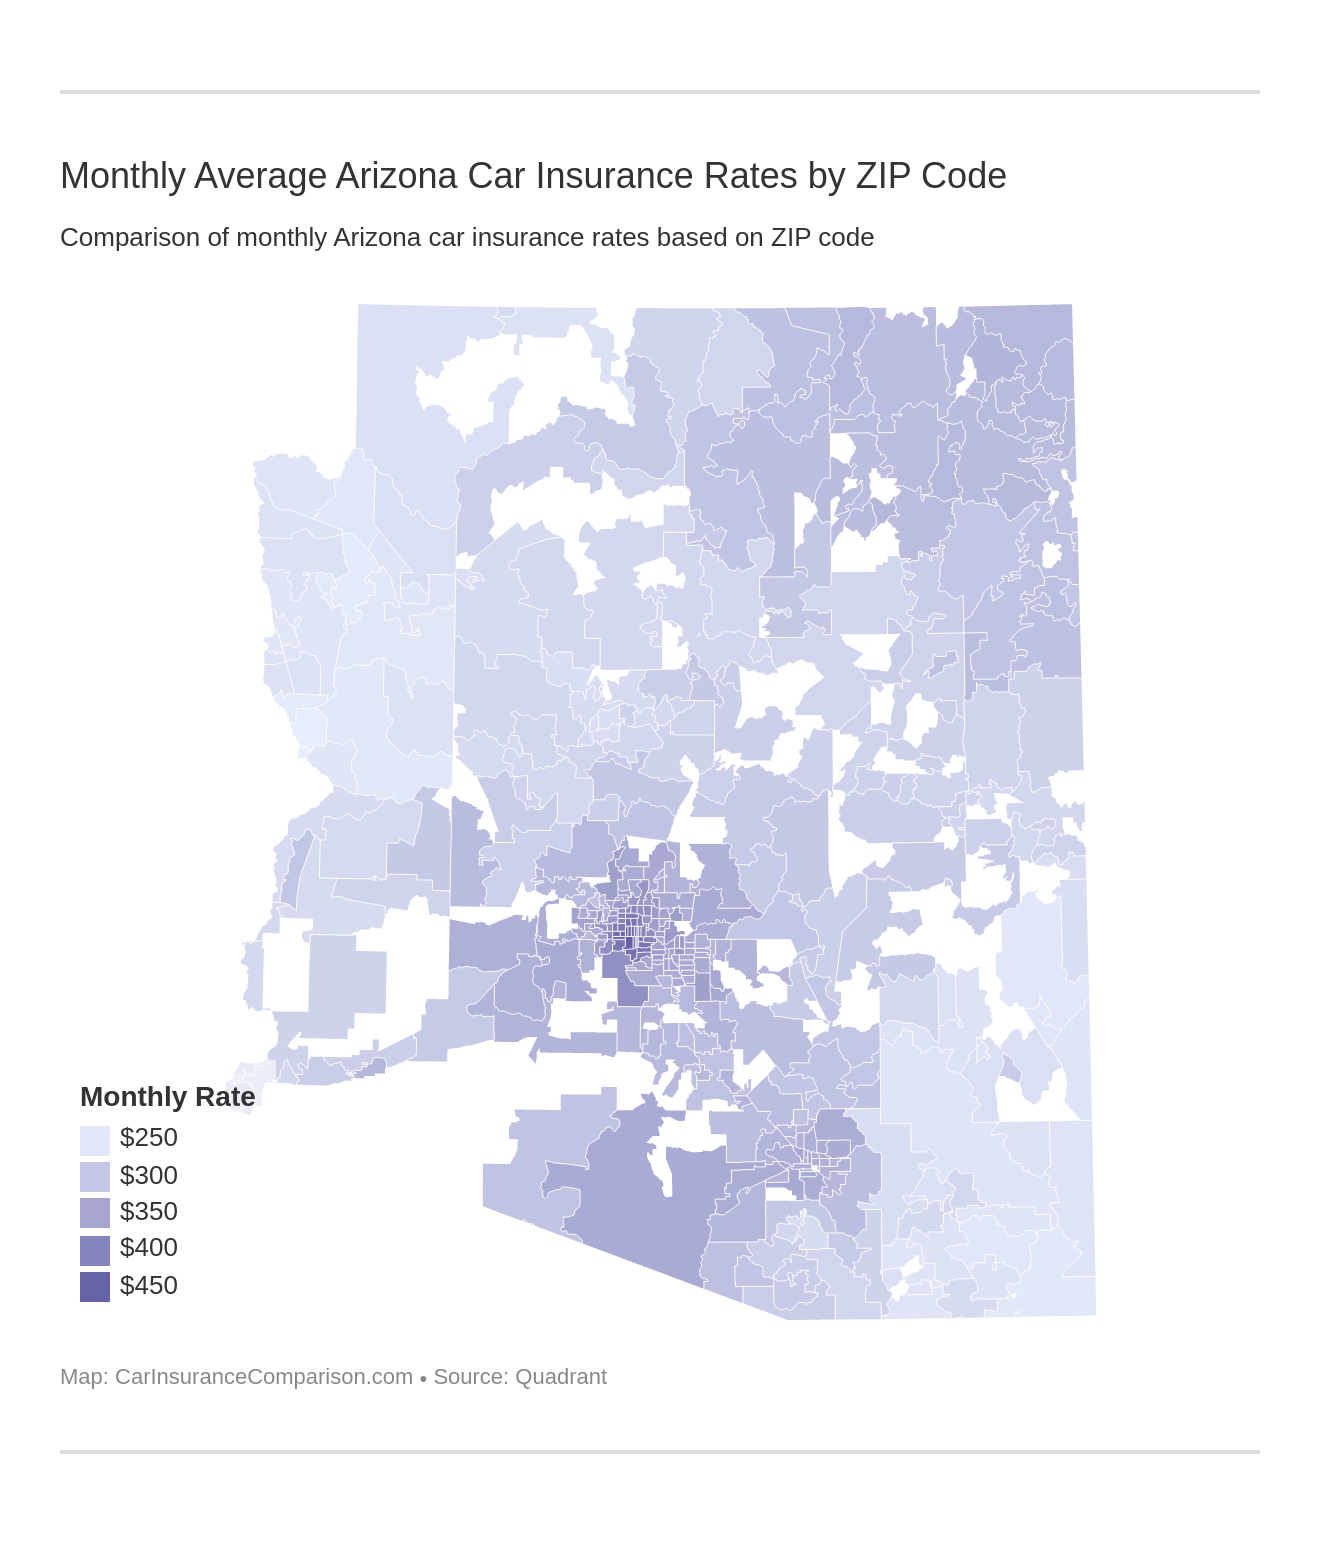 Monthly Average Arizona Car Insurance Rates by ZIP Code